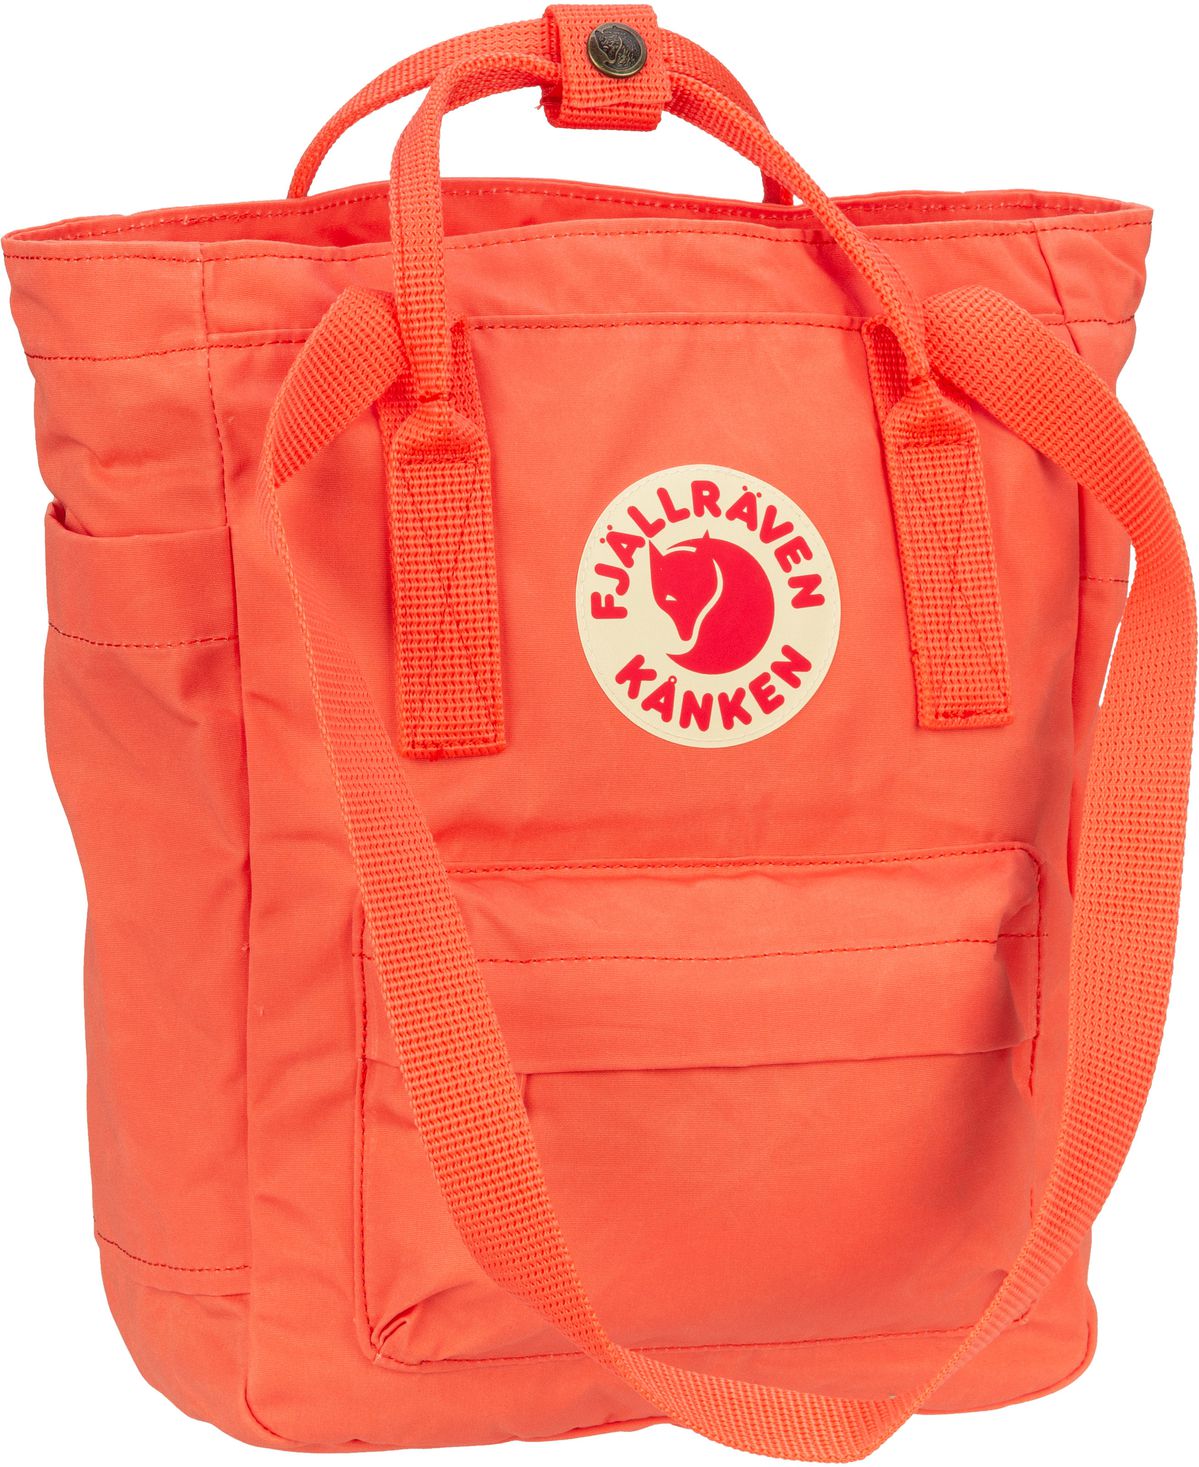 Fjällräven Kanken Totepack Mini  in Orange (8 Liter), Rucksack / Backpack